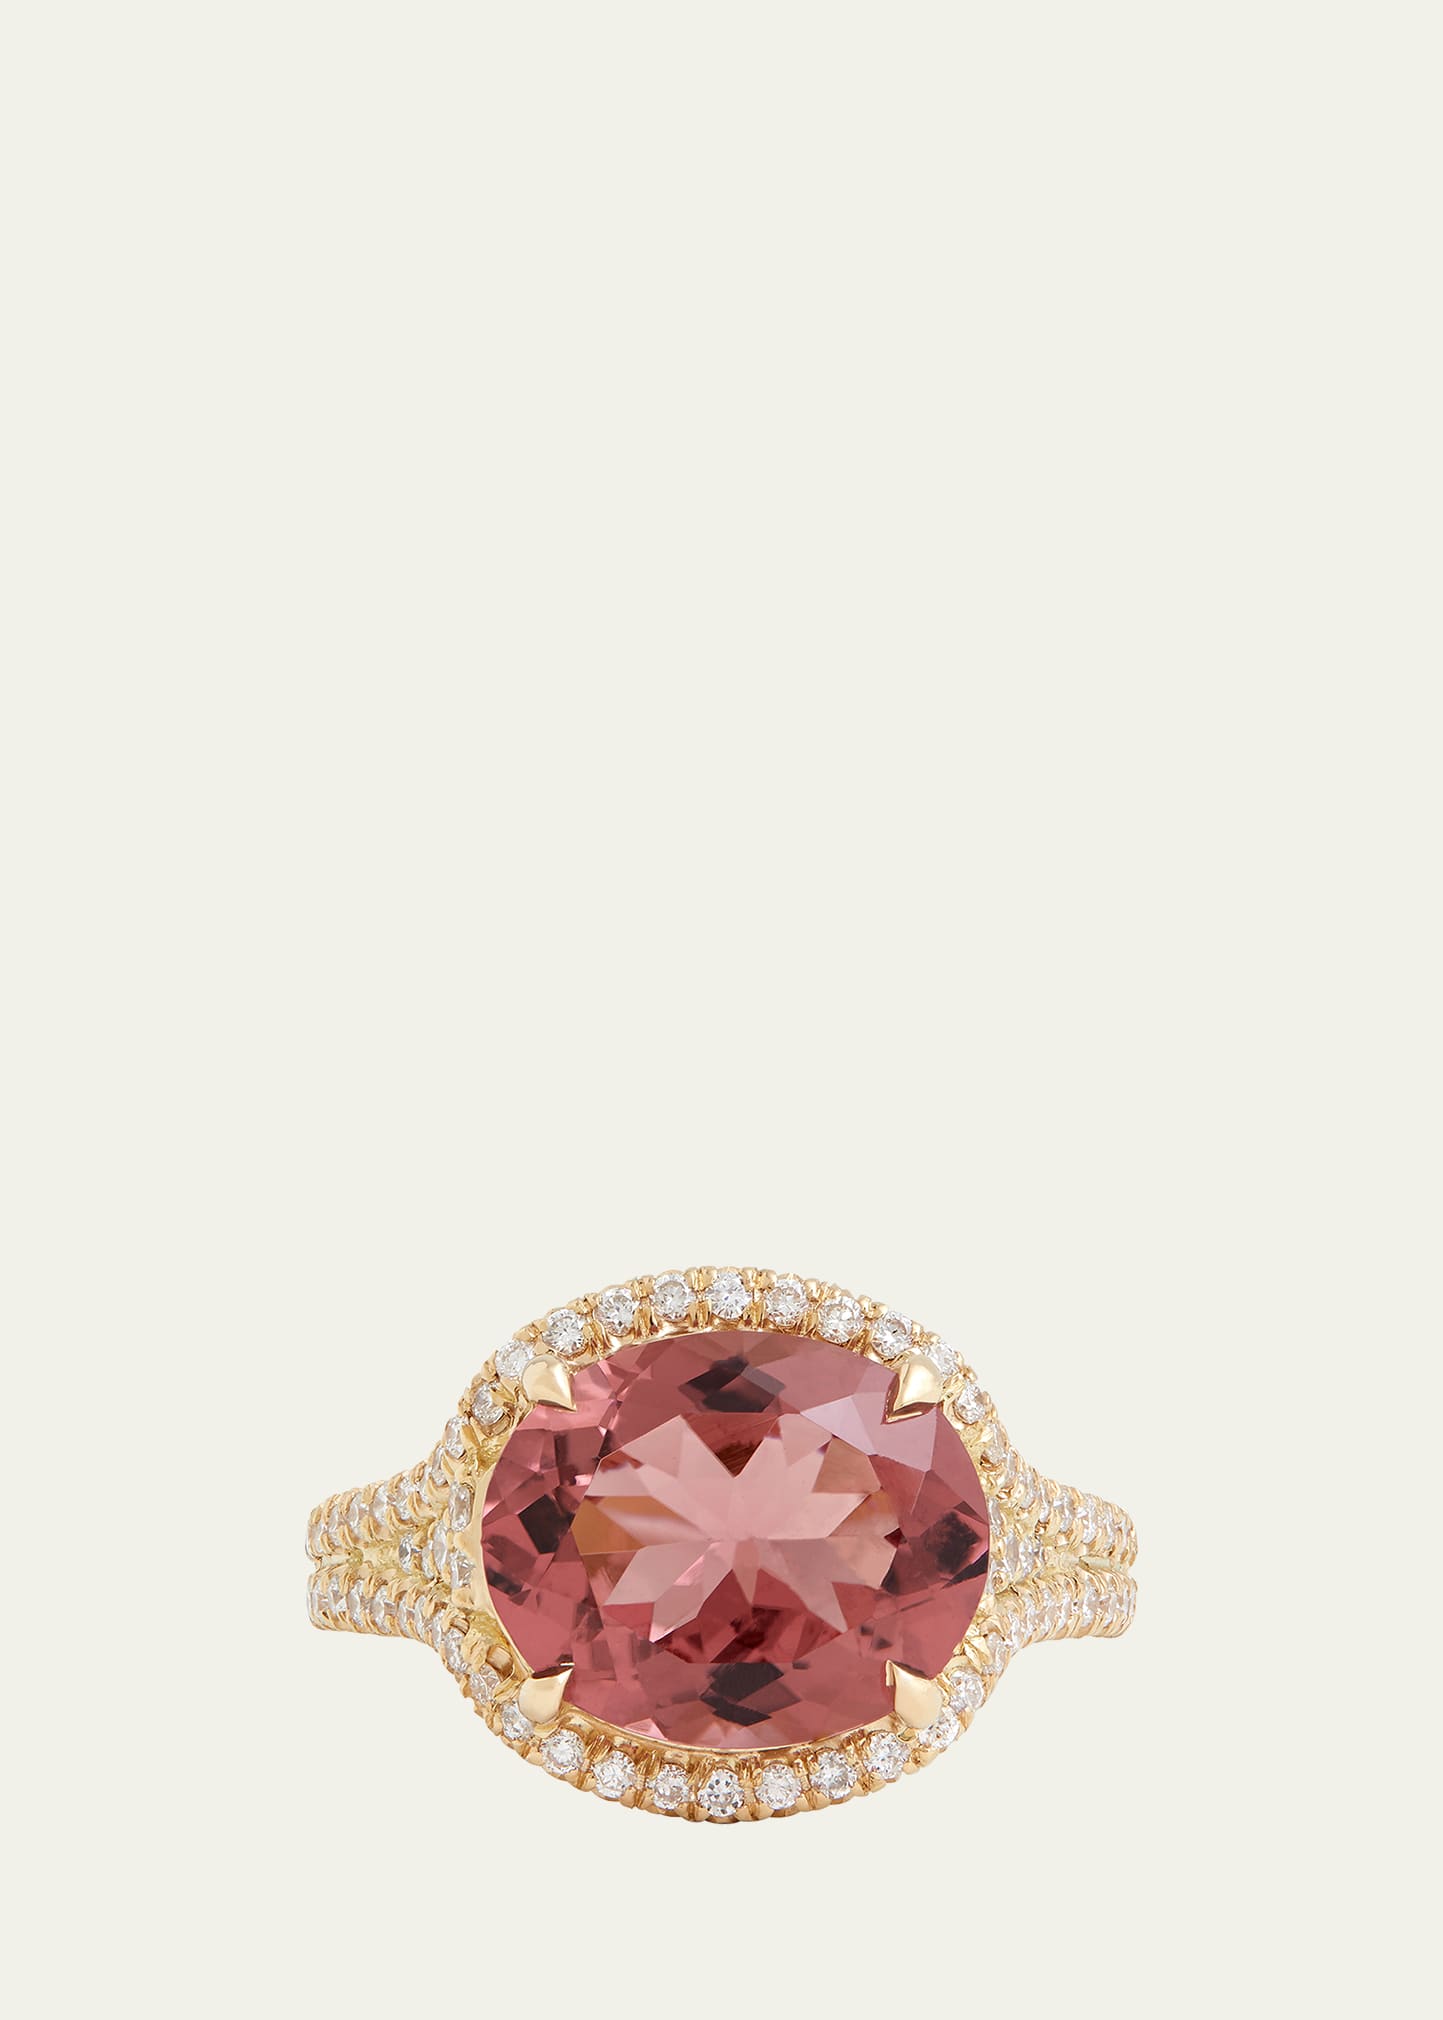 Jamie Wolf 18K Yellow Gold Oval Pink Tourmaline Ring with Diamonds